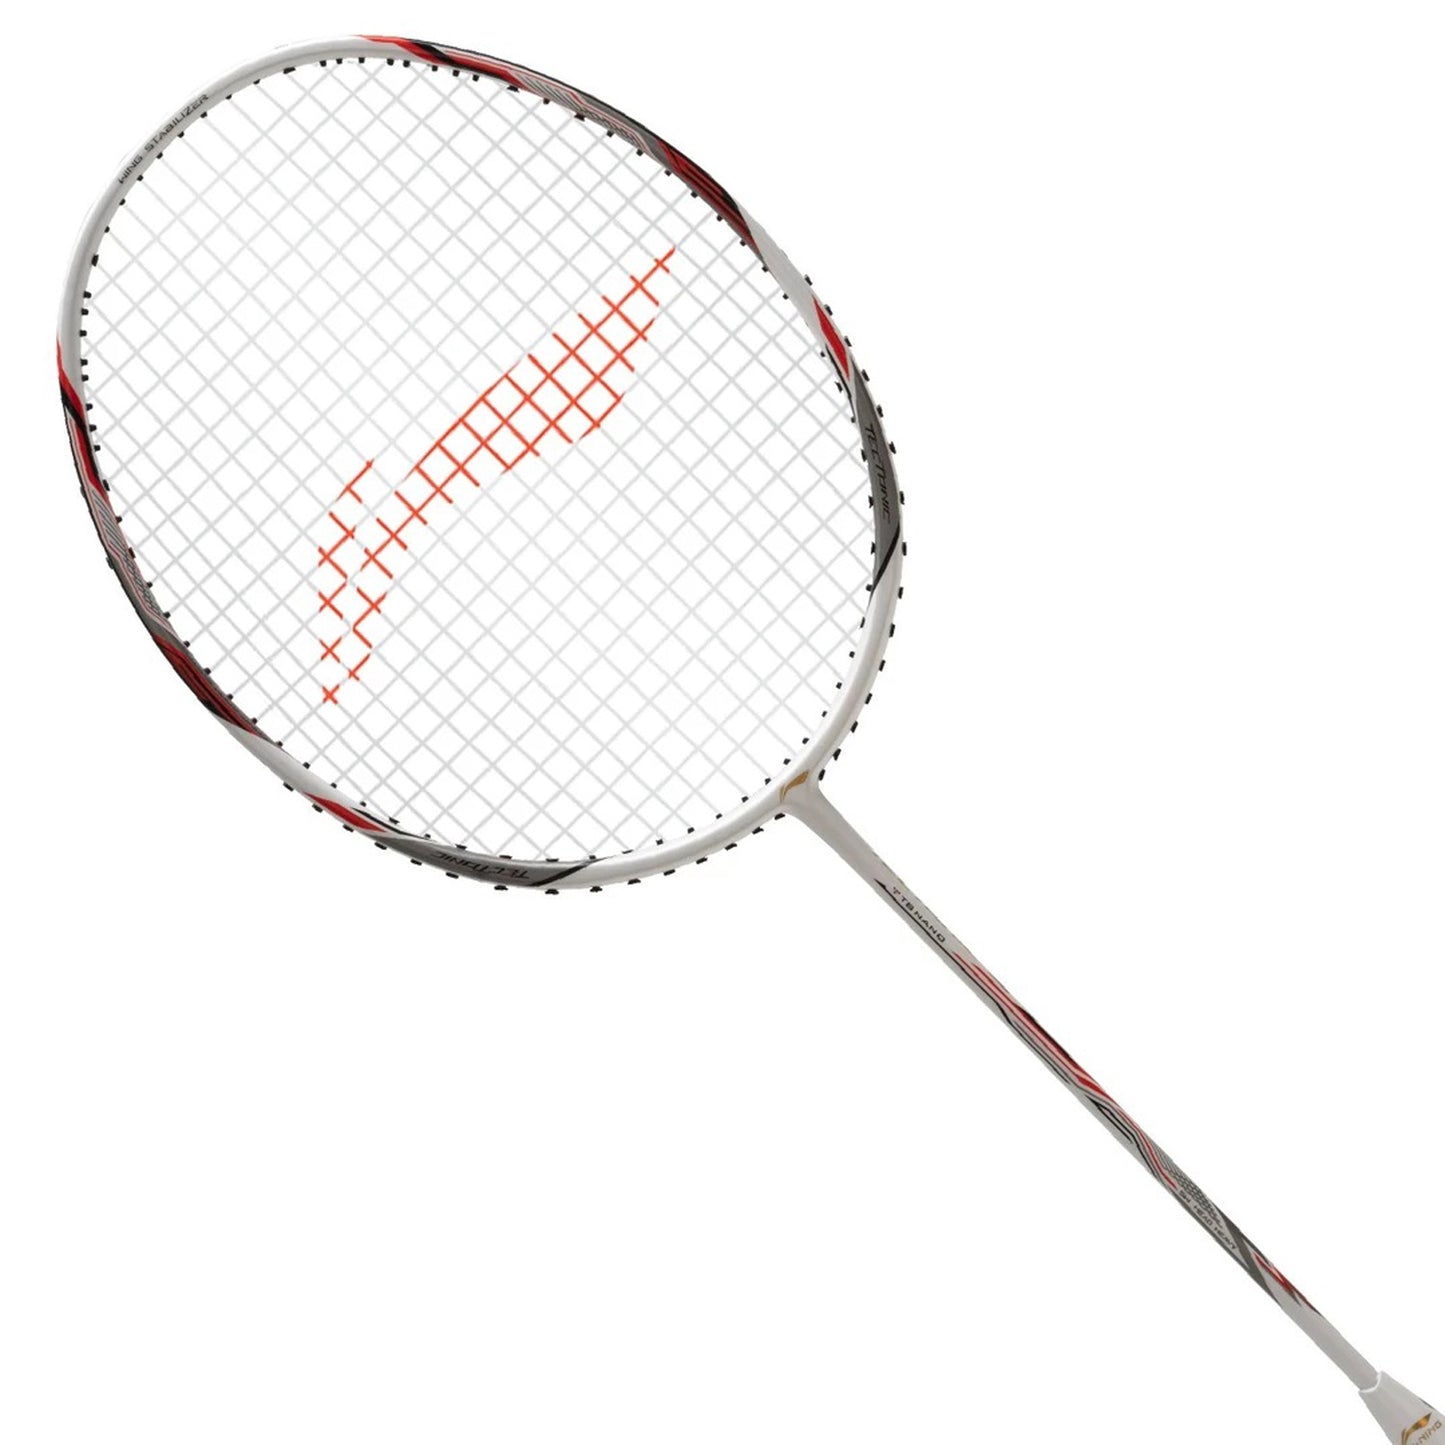 Li-Ning Tectonic 3 R-Series Strung Badminton Racket, White/Black/Red (5UIG6) - Best Price online Prokicksports.com